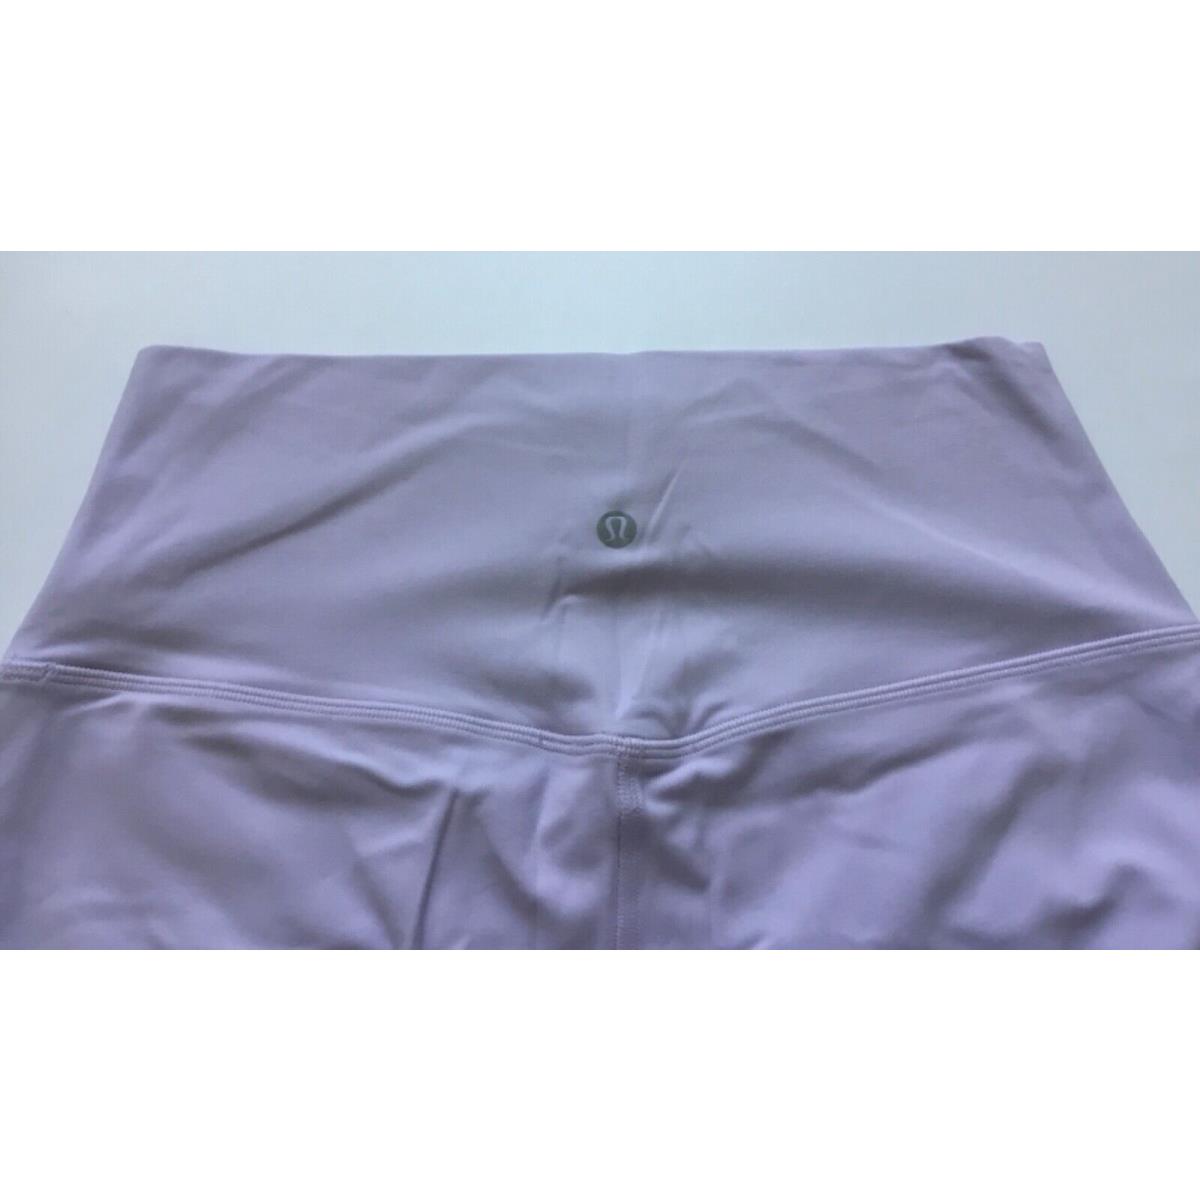 Lululemon clothing  - Purple 1